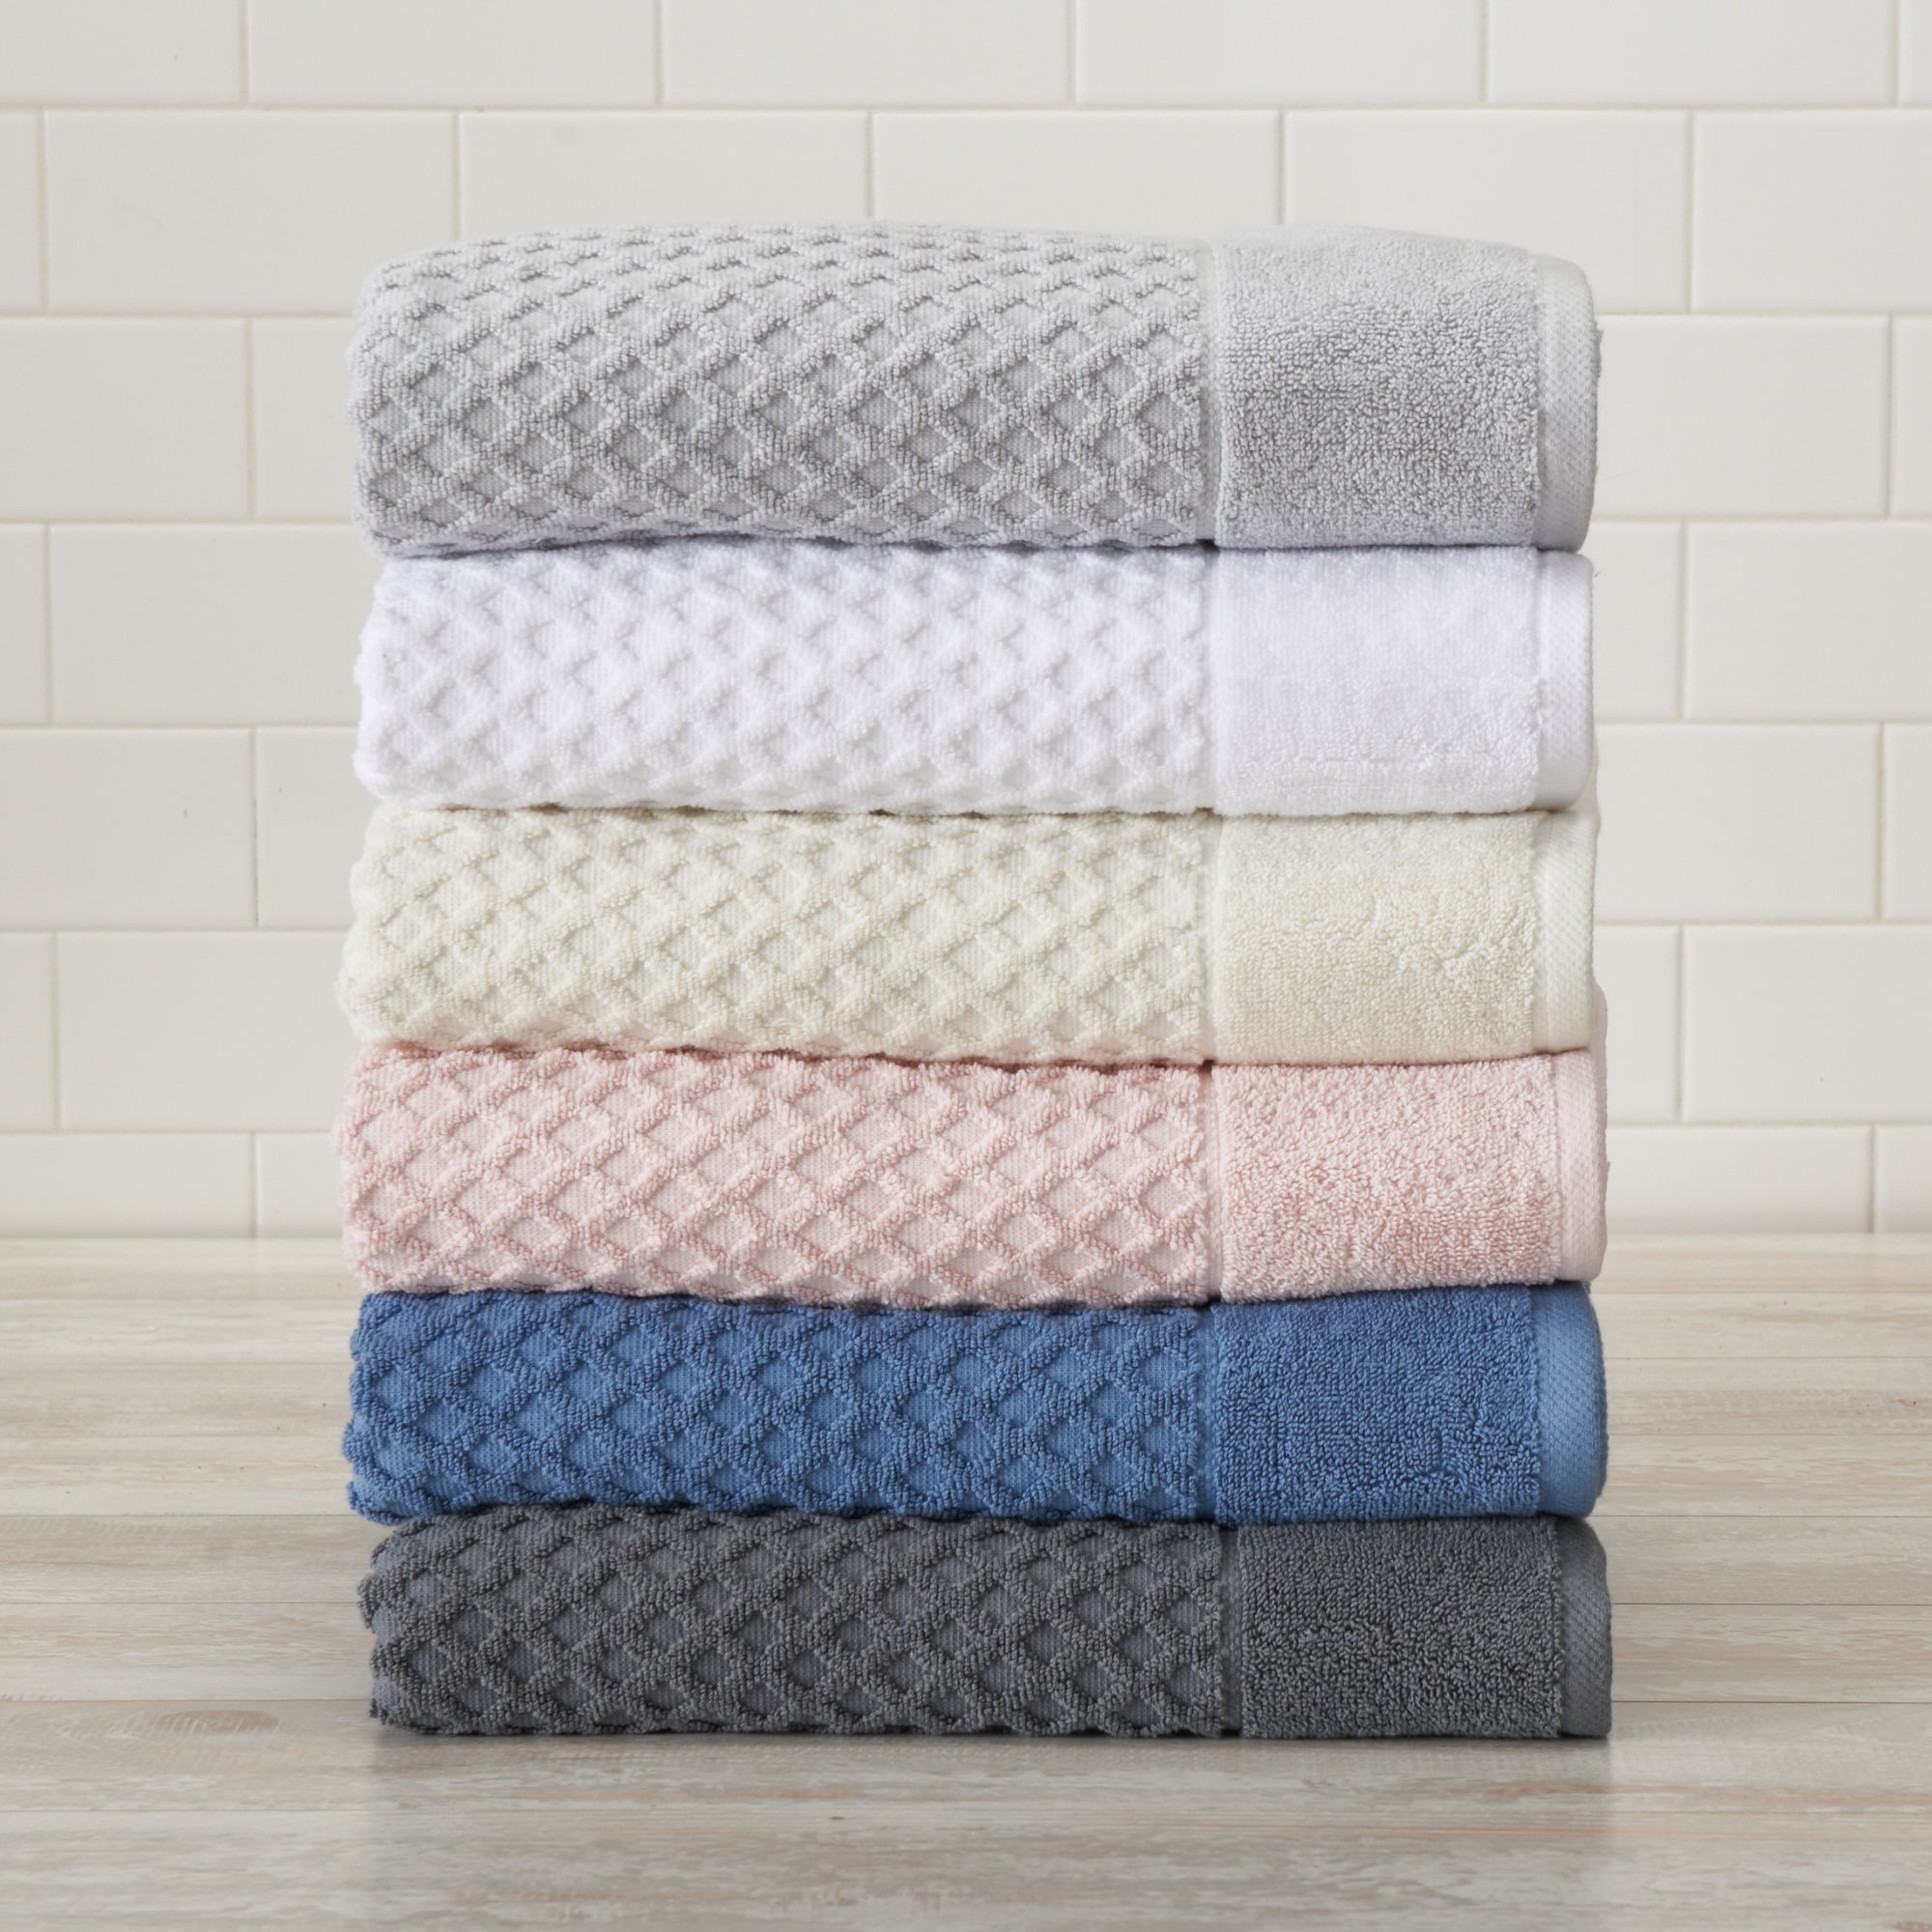 Cifelli Home Turkish Cotton 6 Piece Towel Set Luxury Hotel Quality - N/A -  Bed Bath & Beyond - 33344218